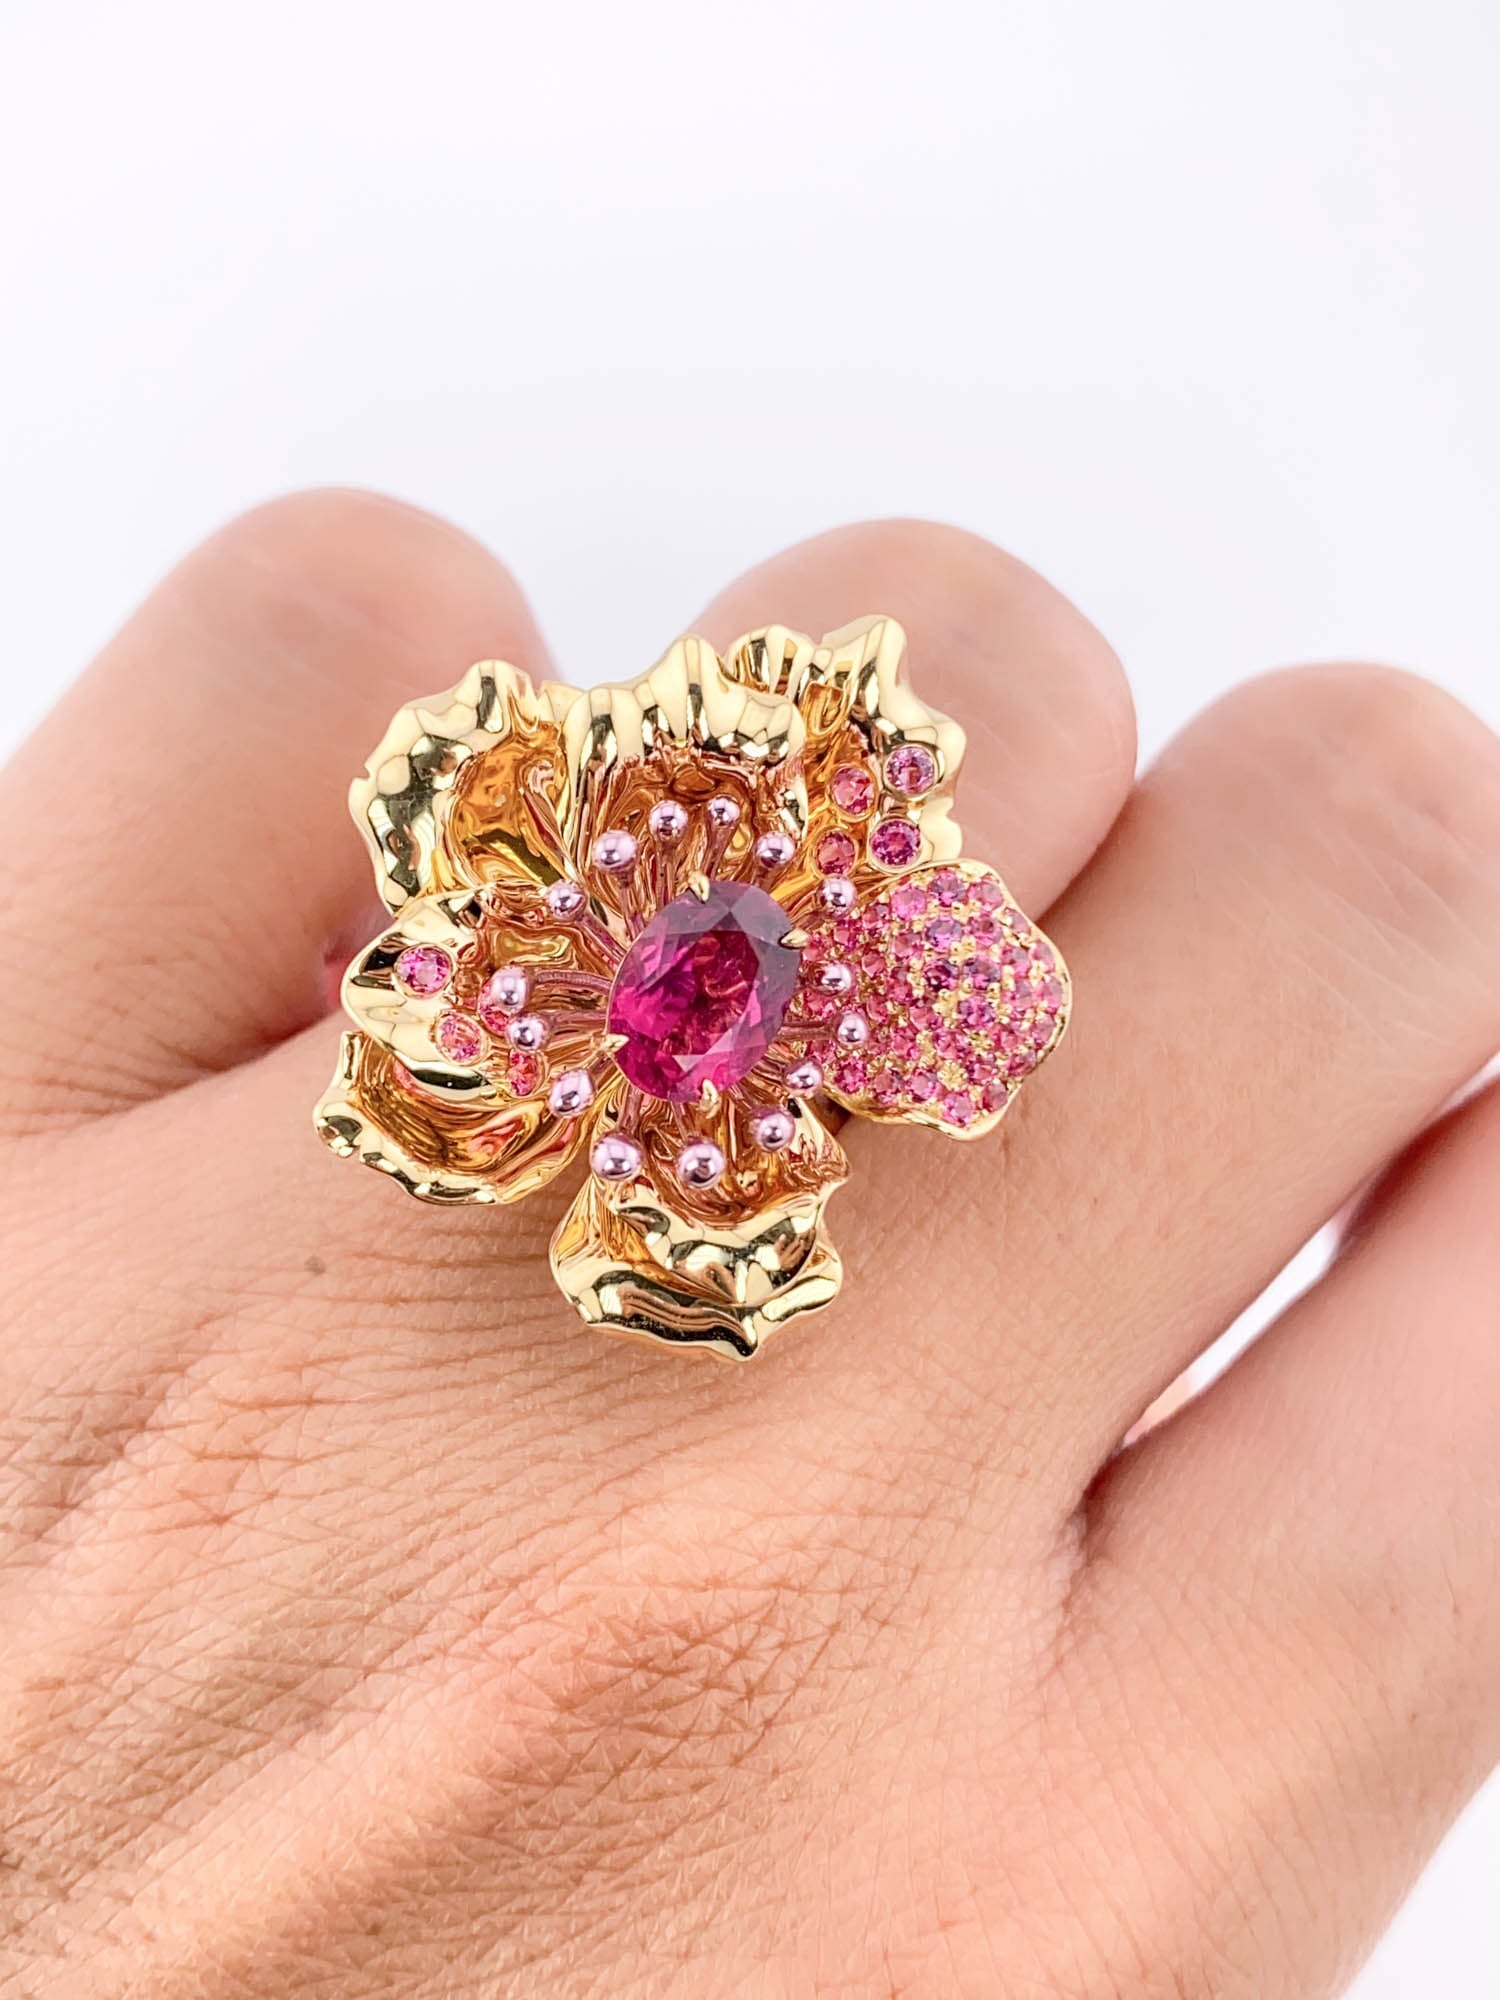 Art Jewelry Rubellite Tourmaline Center Flower Ring / Pendant Convertible 18K Gold R6641 Aurora Designer